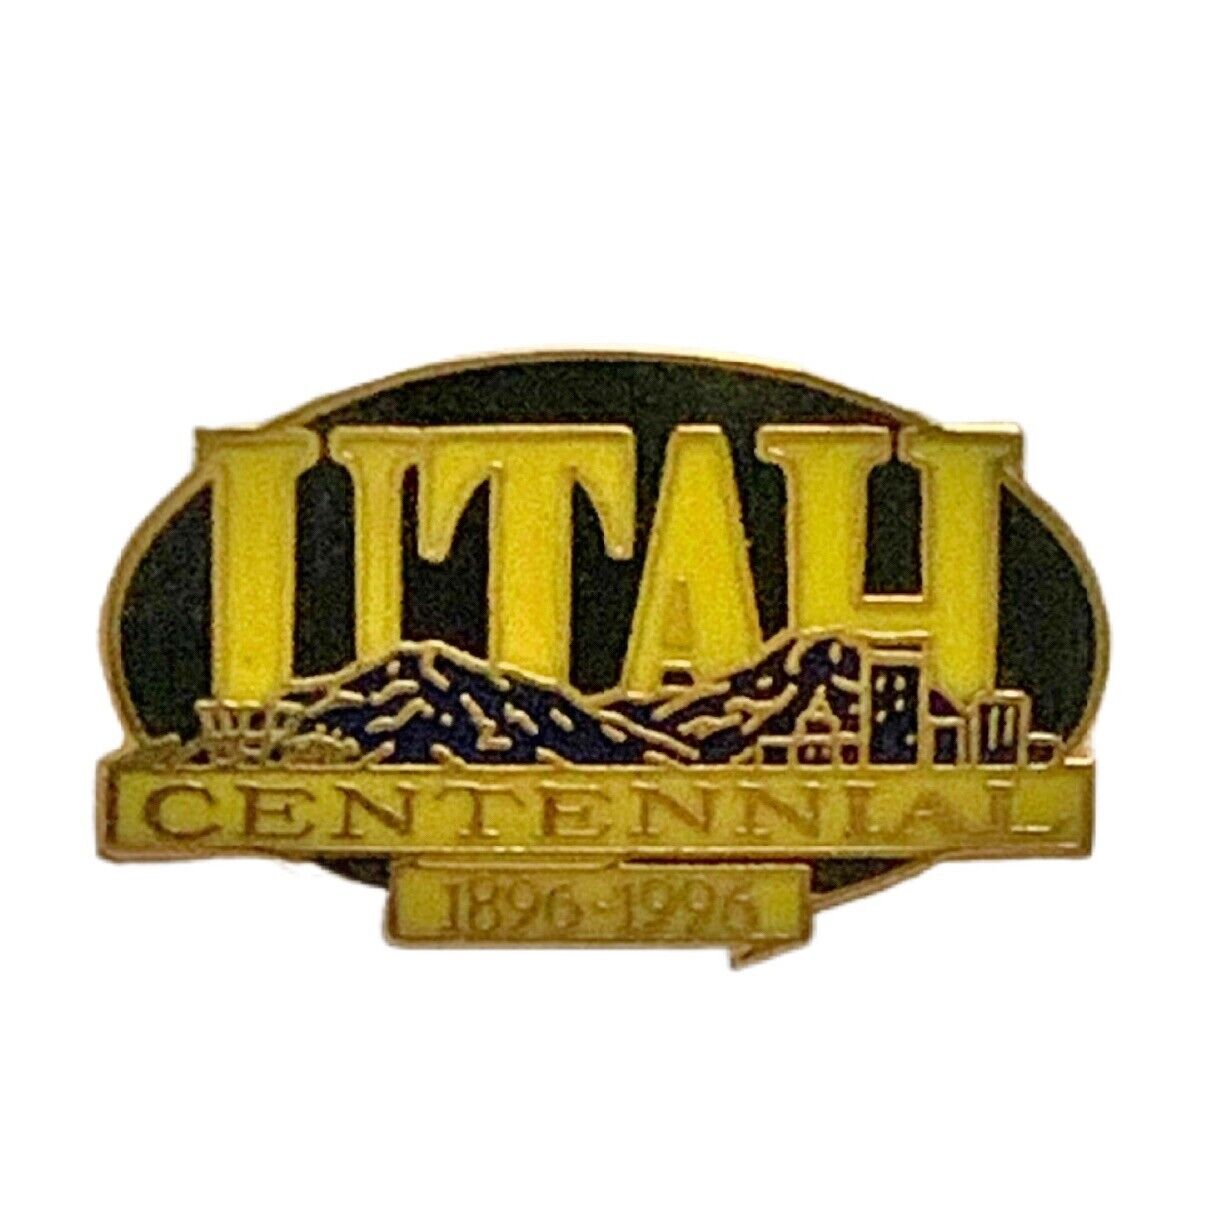 Vintage 1996 Utah Centennial 1896-1996 Souvenir Pin